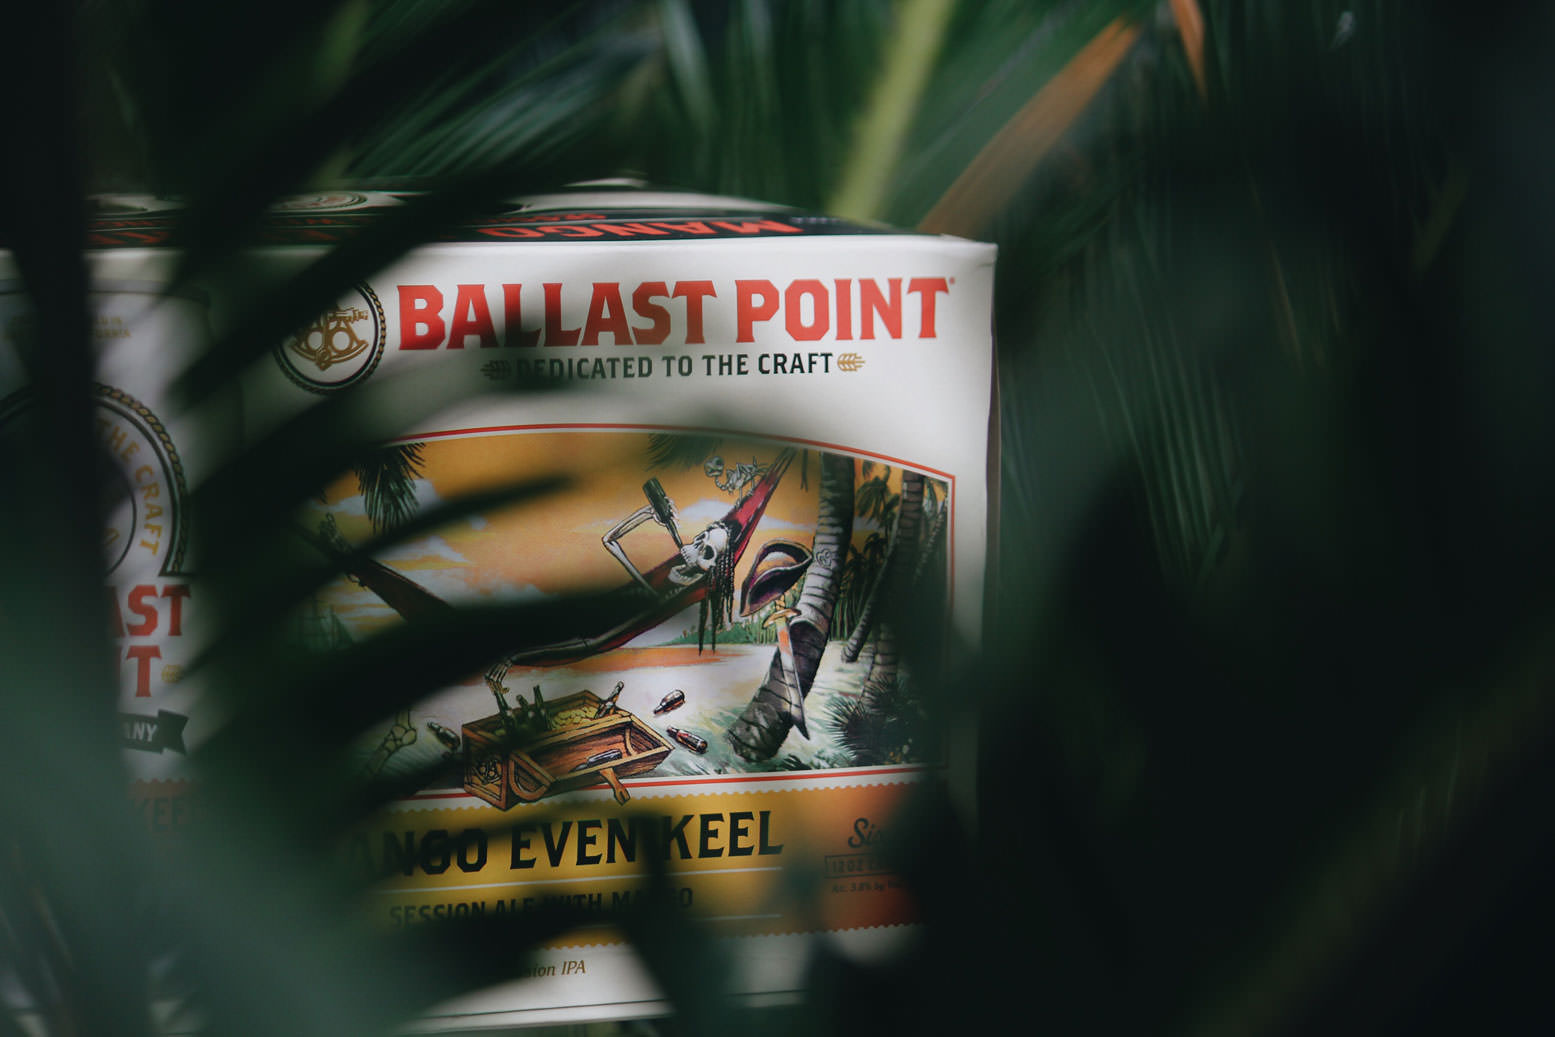 Ballast Point Even Mango Keel